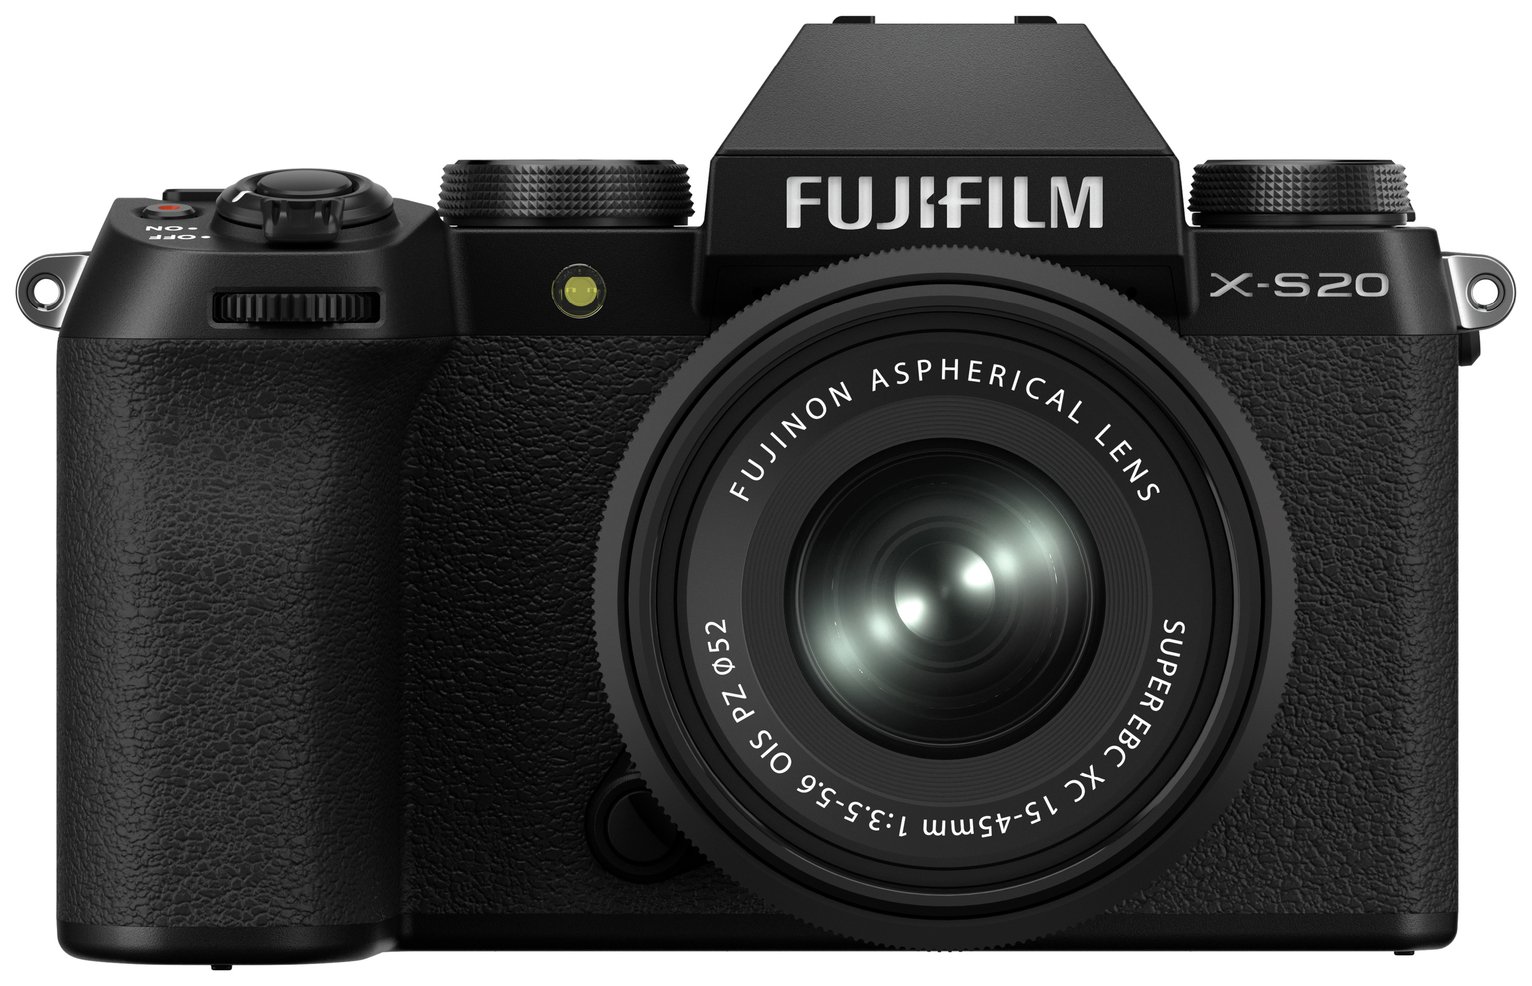 Fujifilm X-S20 Mirrorless Camera with 15-45mm Lens - Black